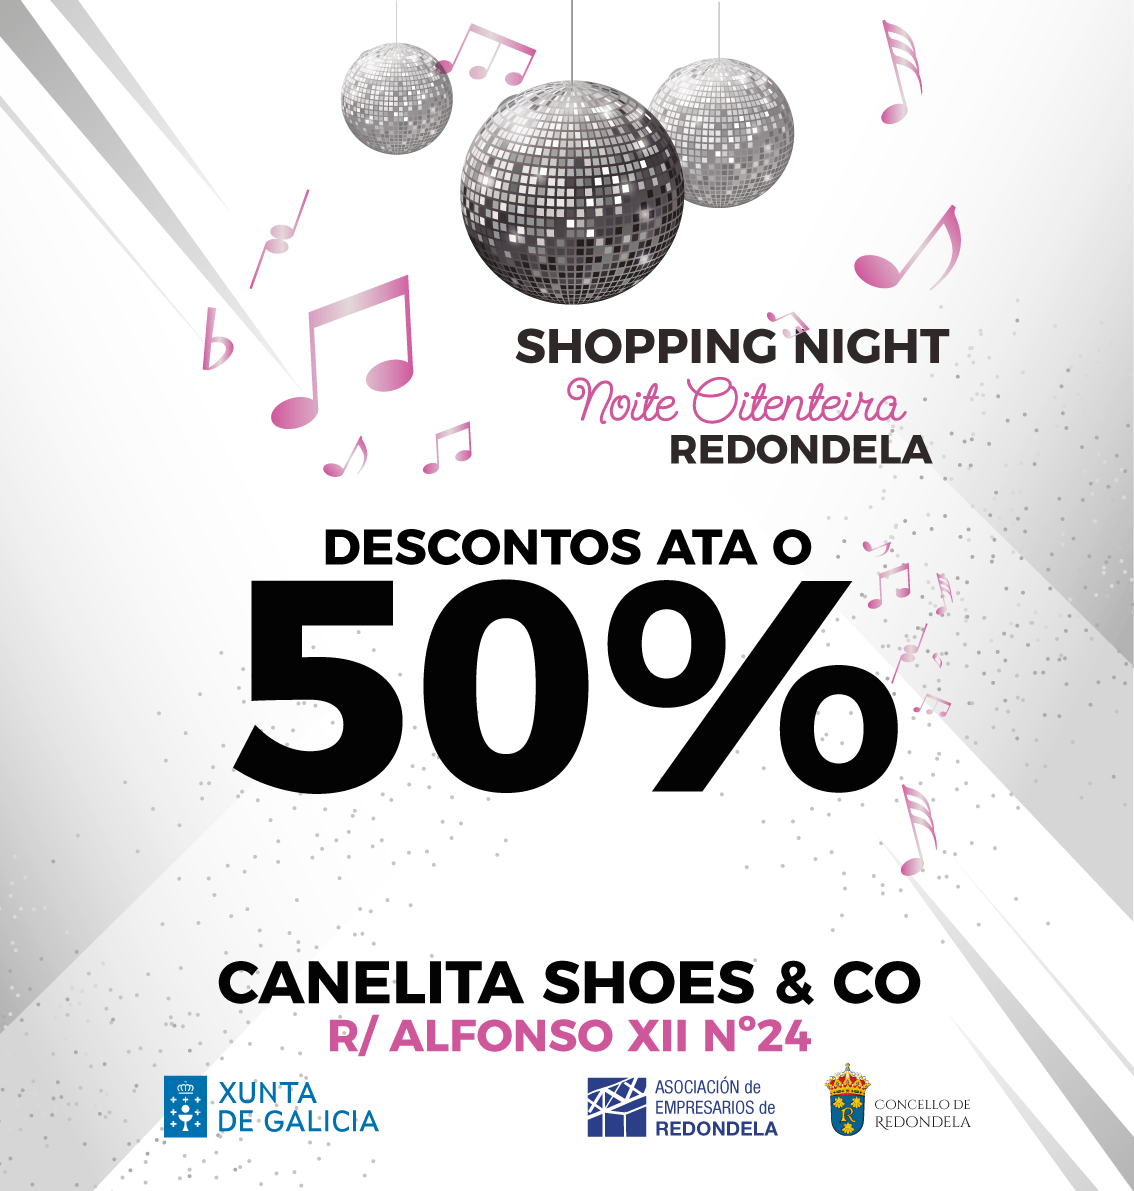 Promo_canelita_Shoes_1.png